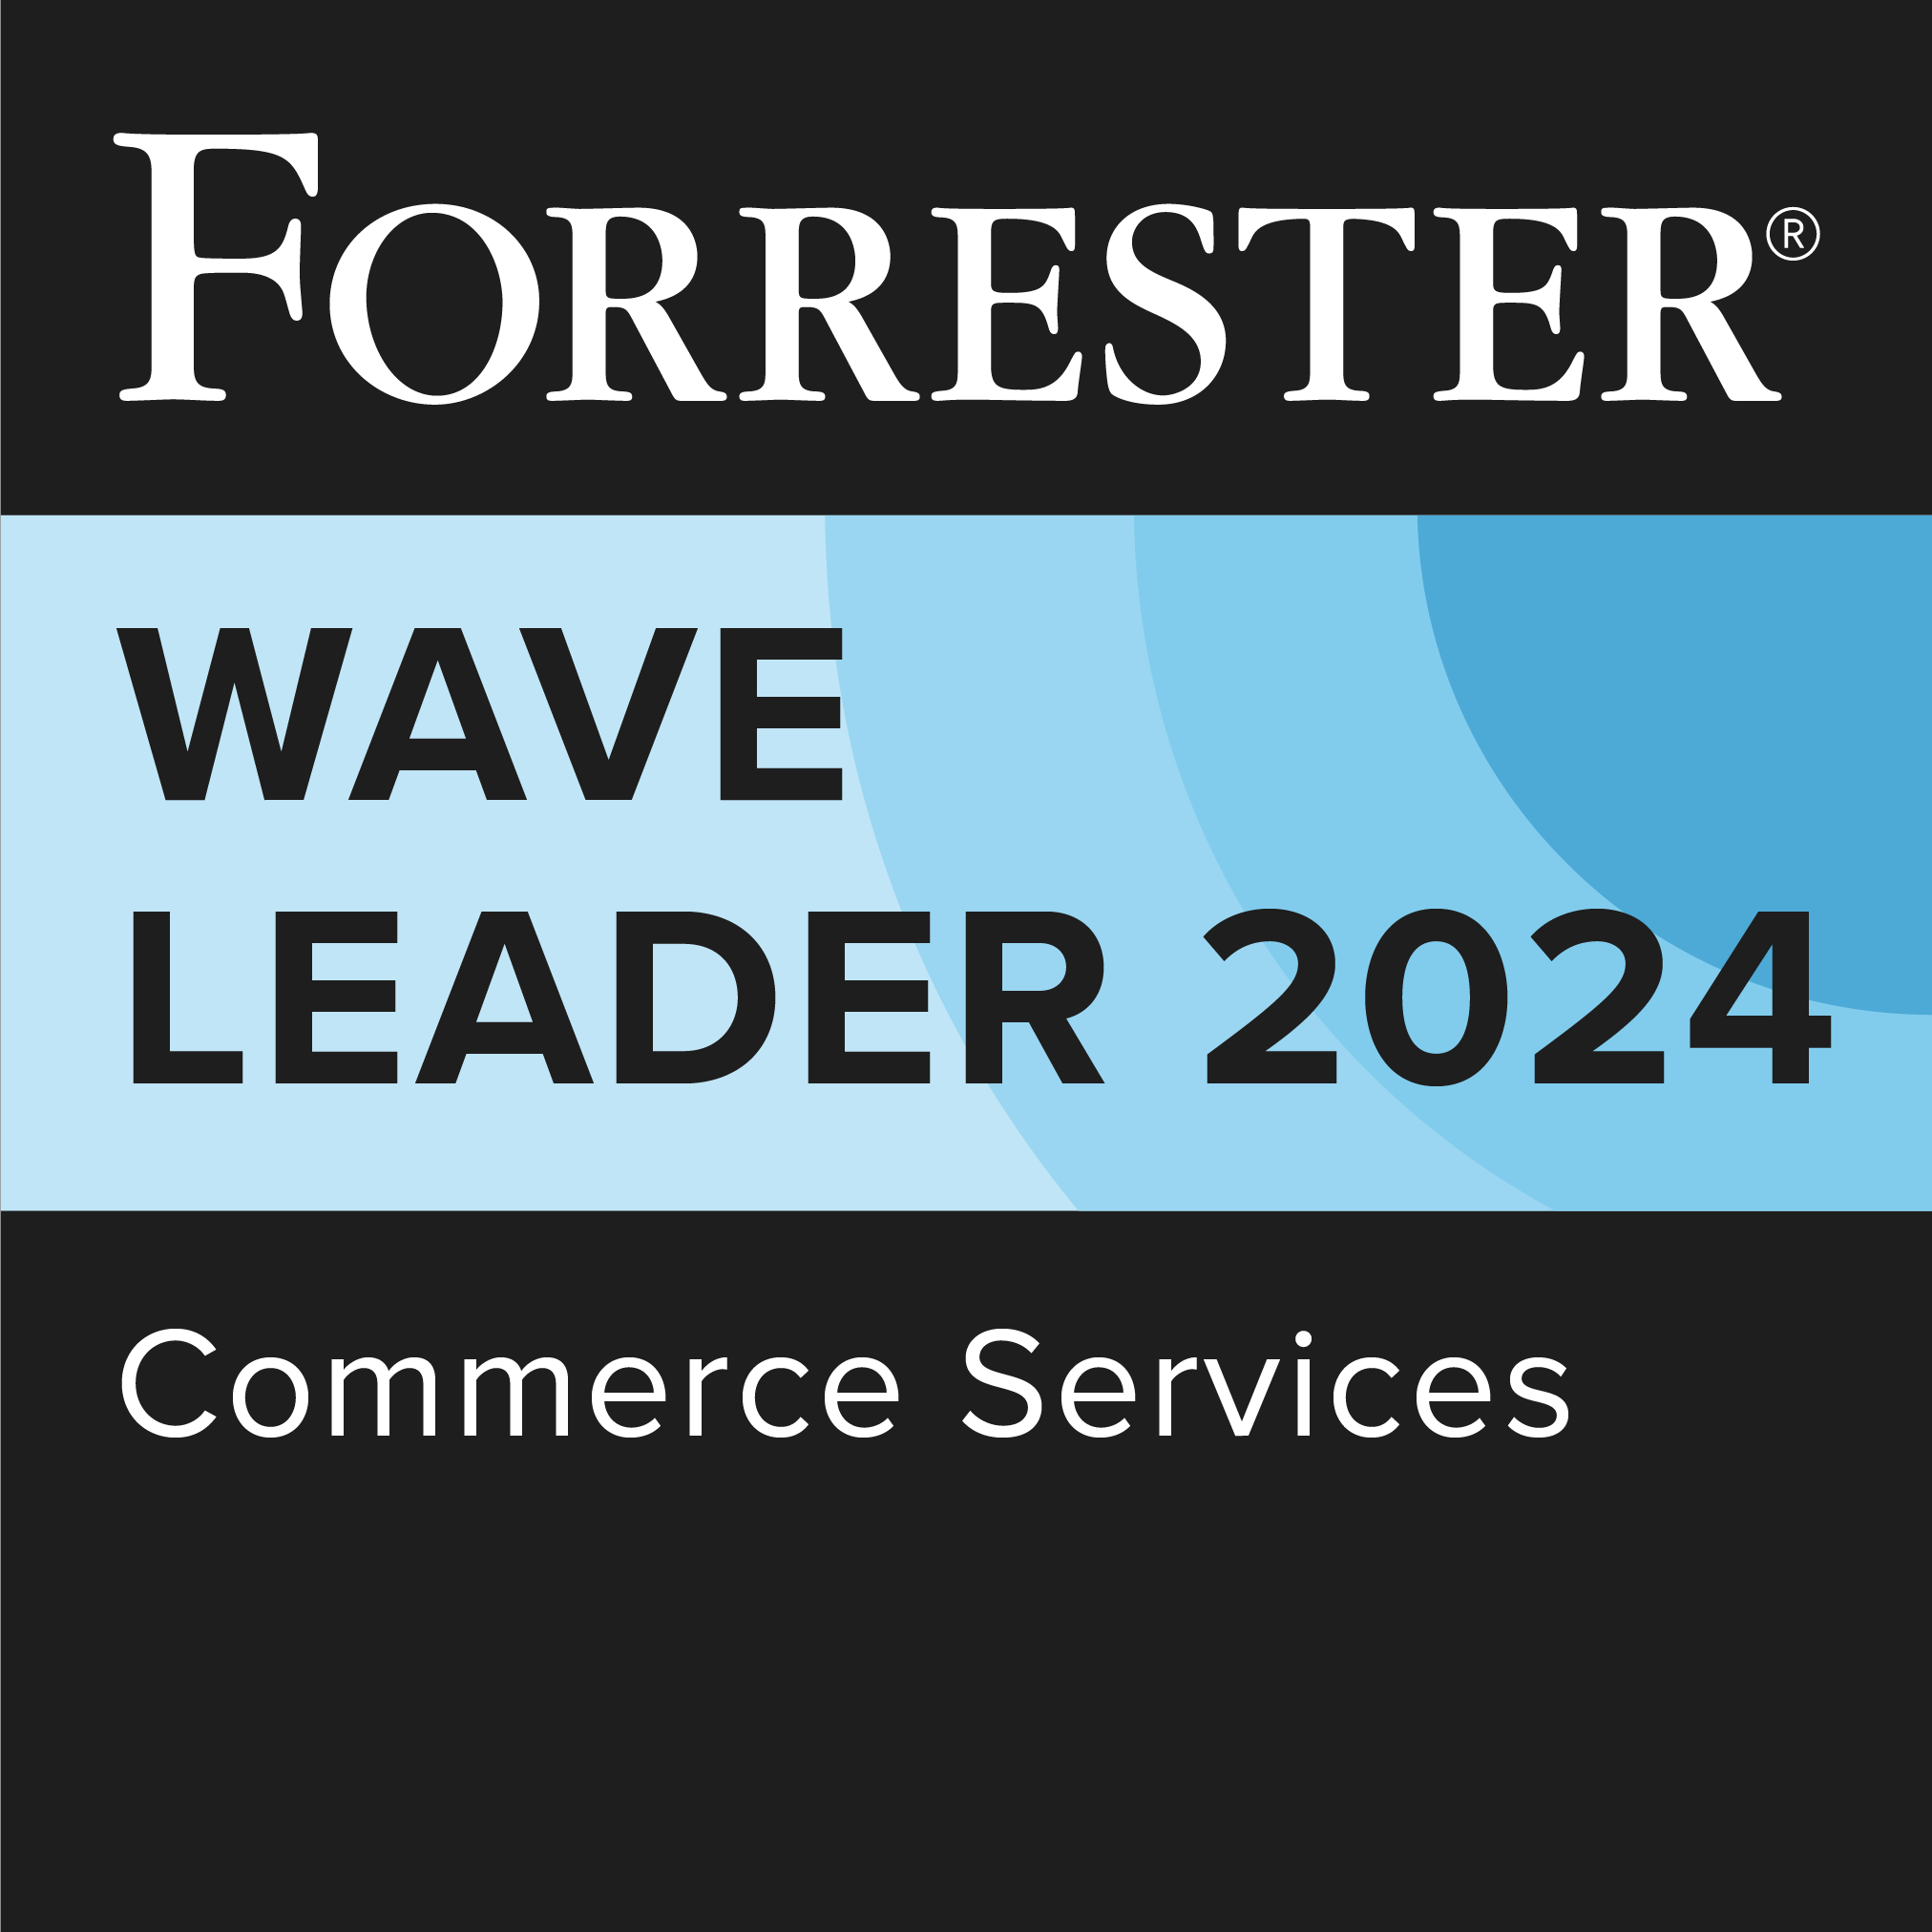 Tile announcing WPP as Wave Leader 2024 for Forrester Commerce Services